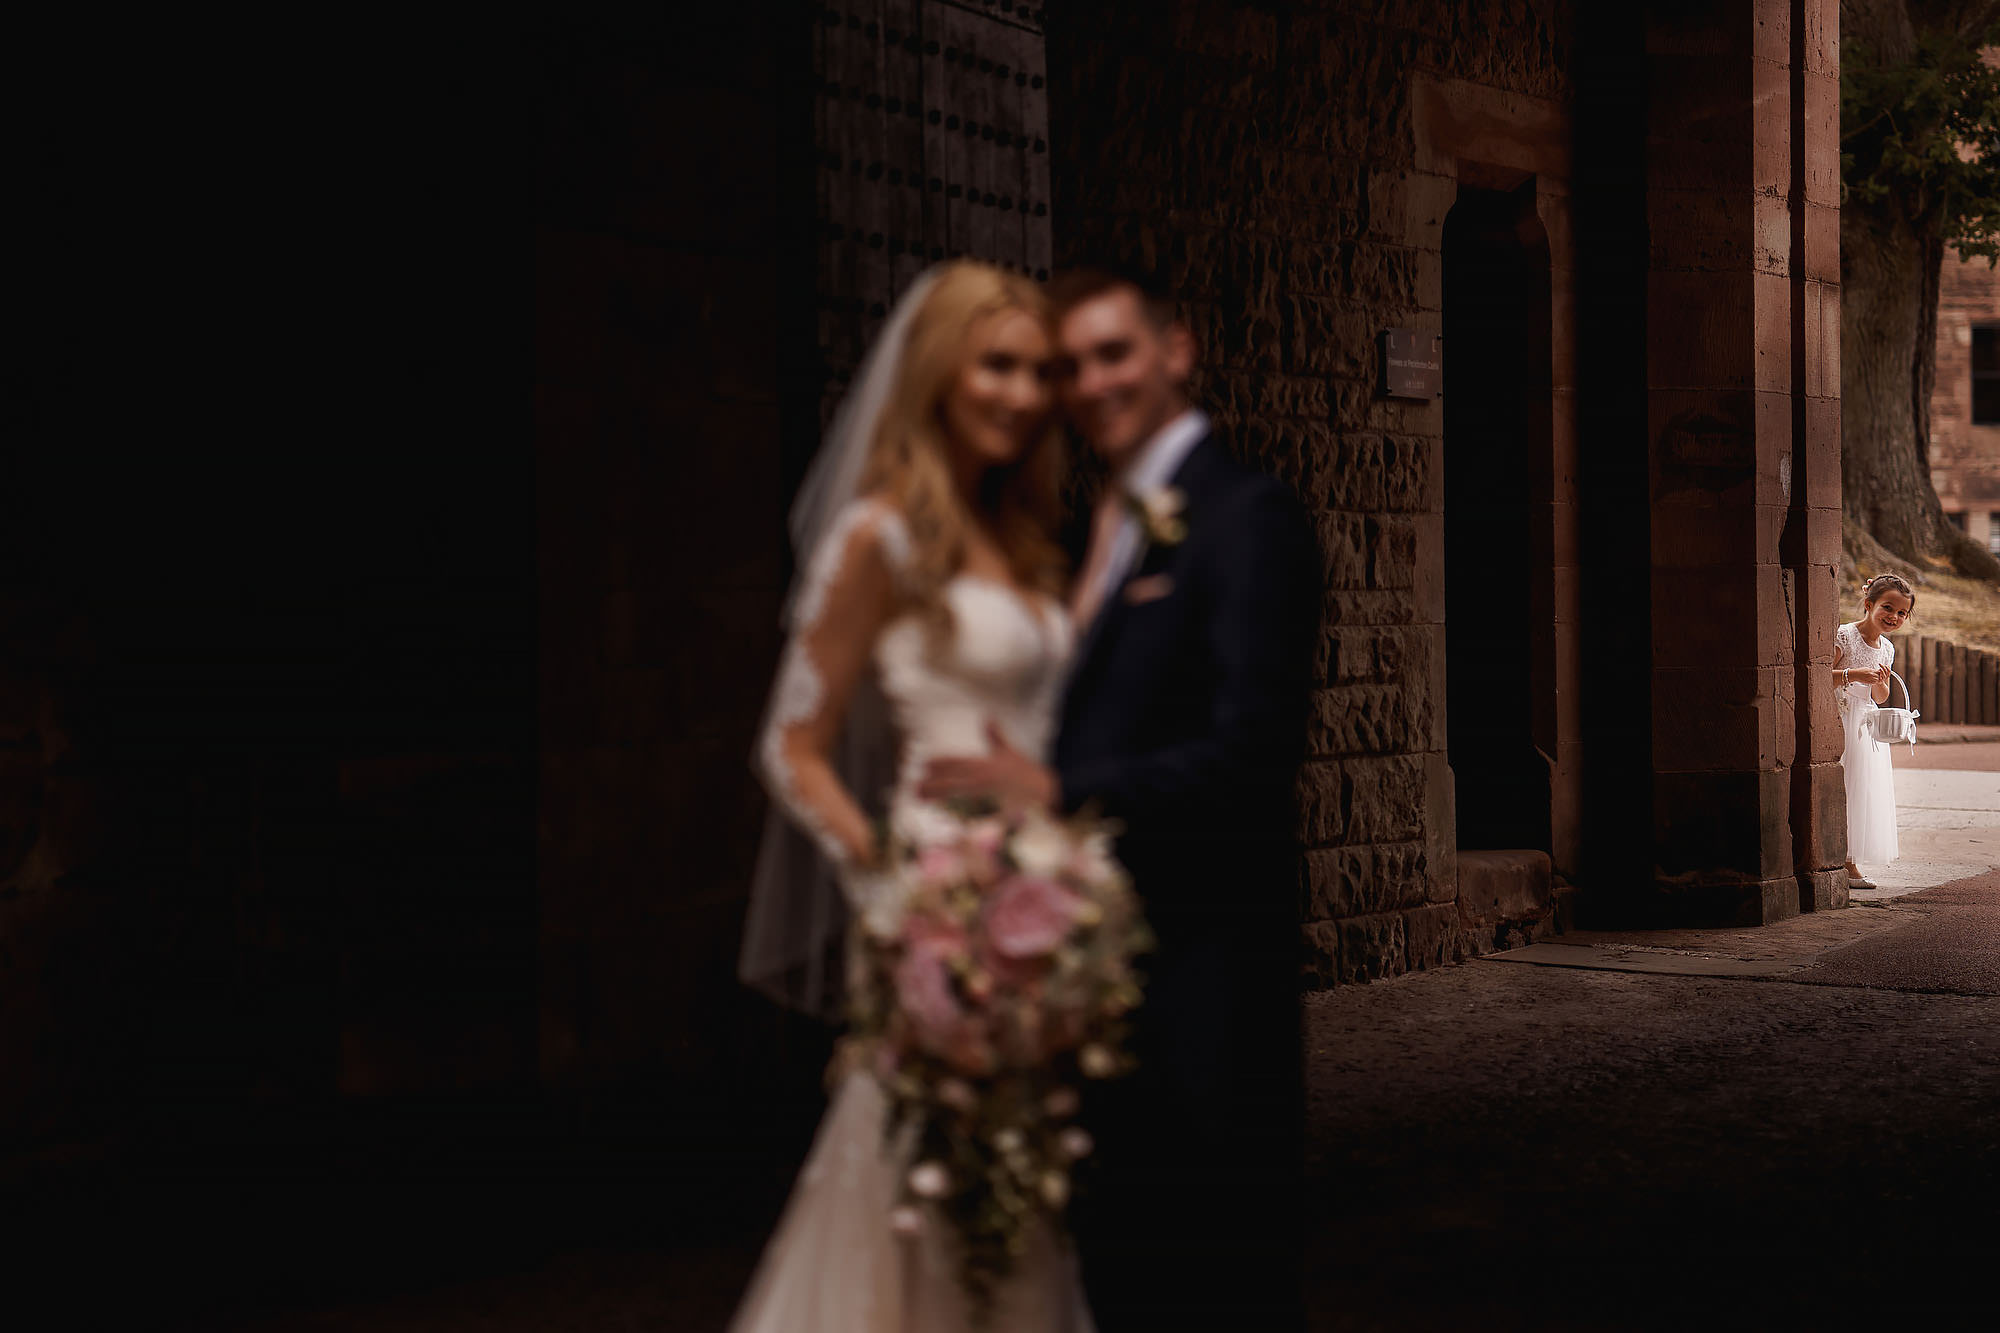 Peckforton castle luxury wedding - beautiful fine art wedding photography by arj photography cheshire